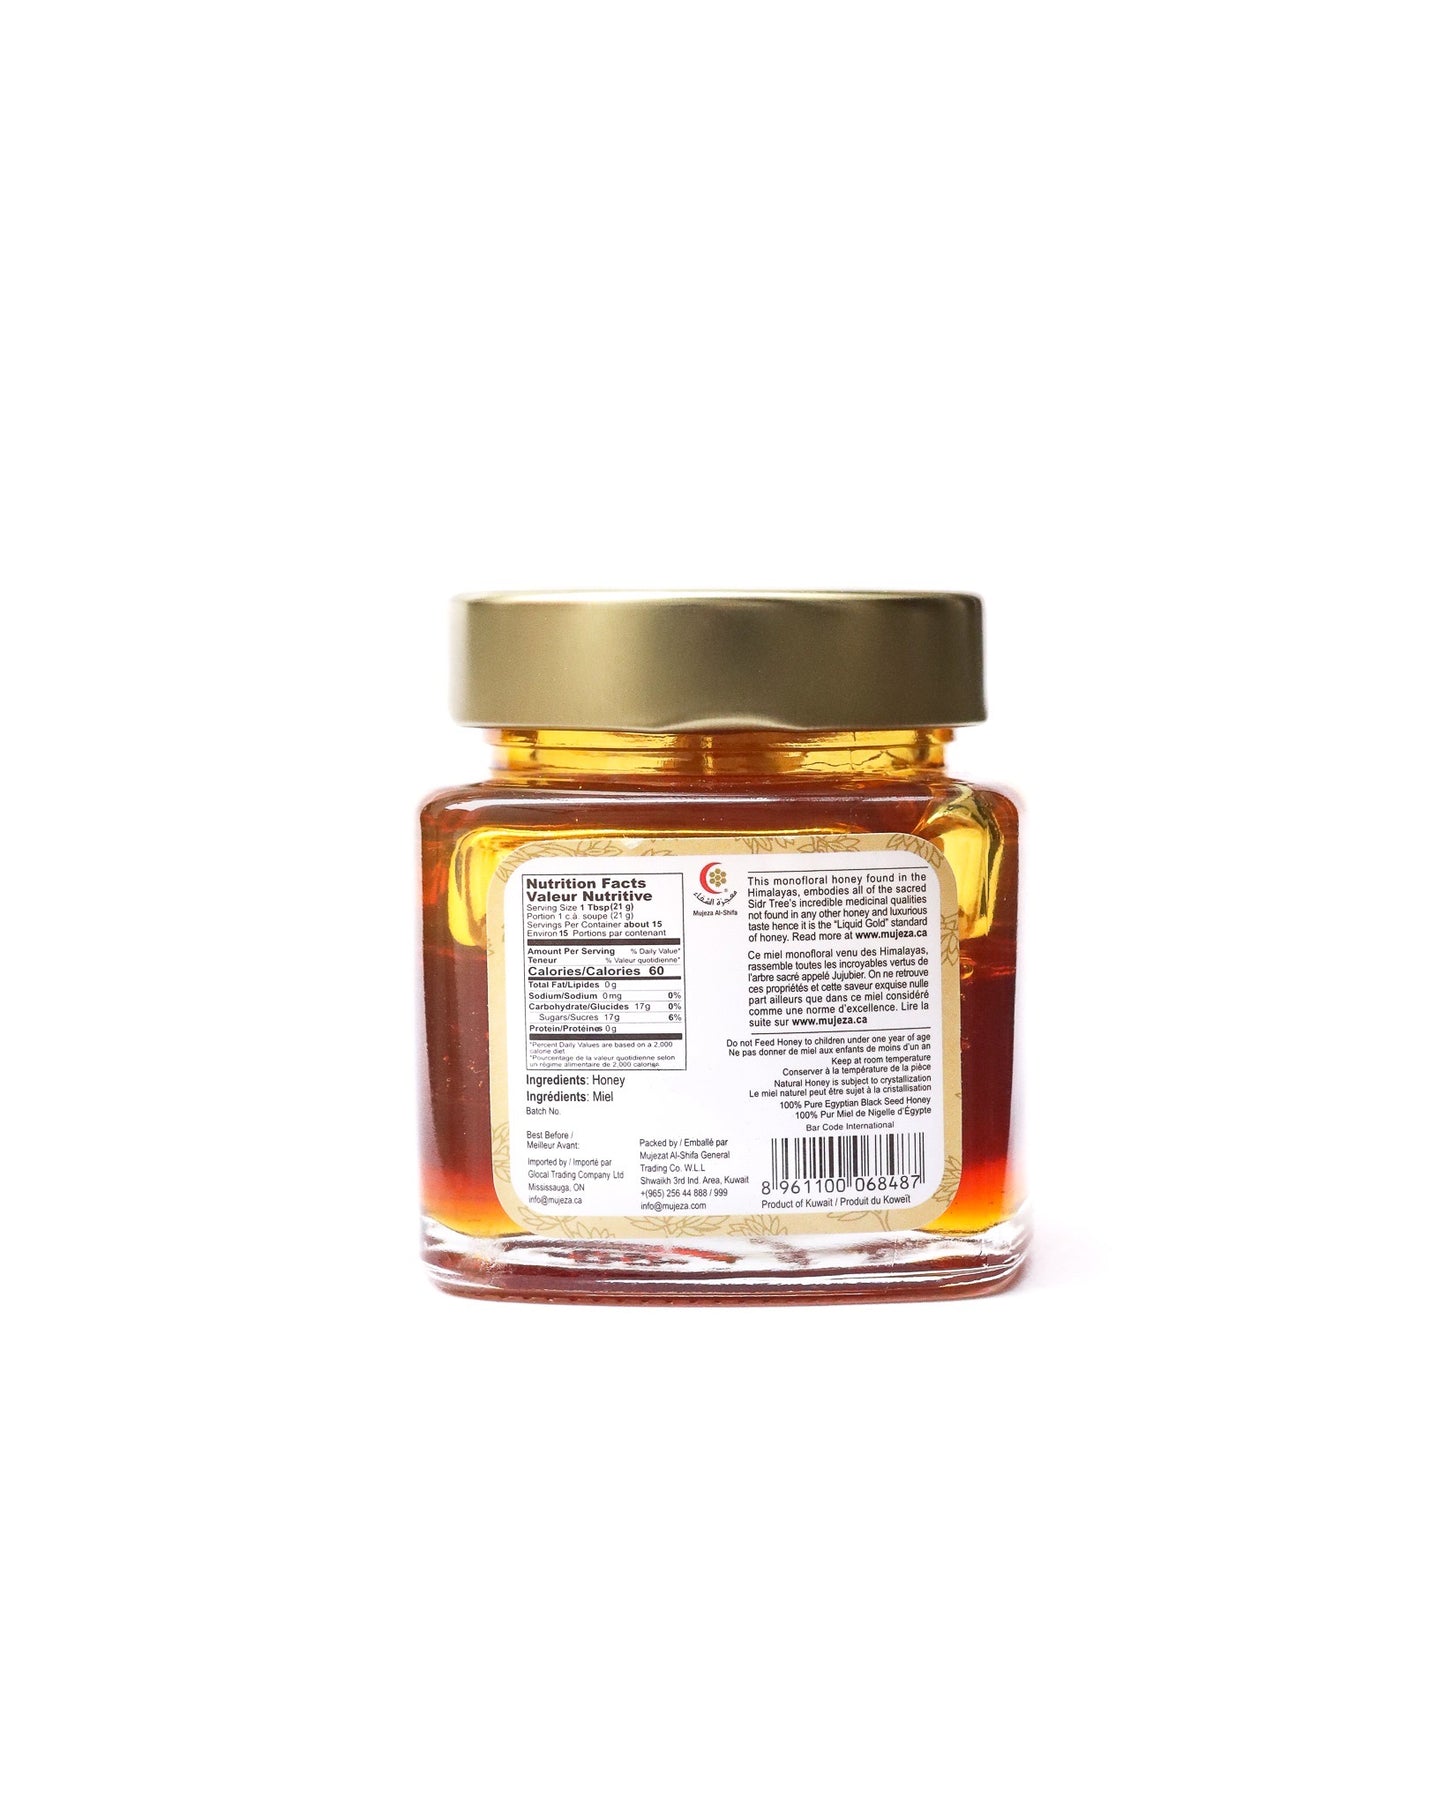 Mountain Sidr Plain Honey Kashmiri (250g)